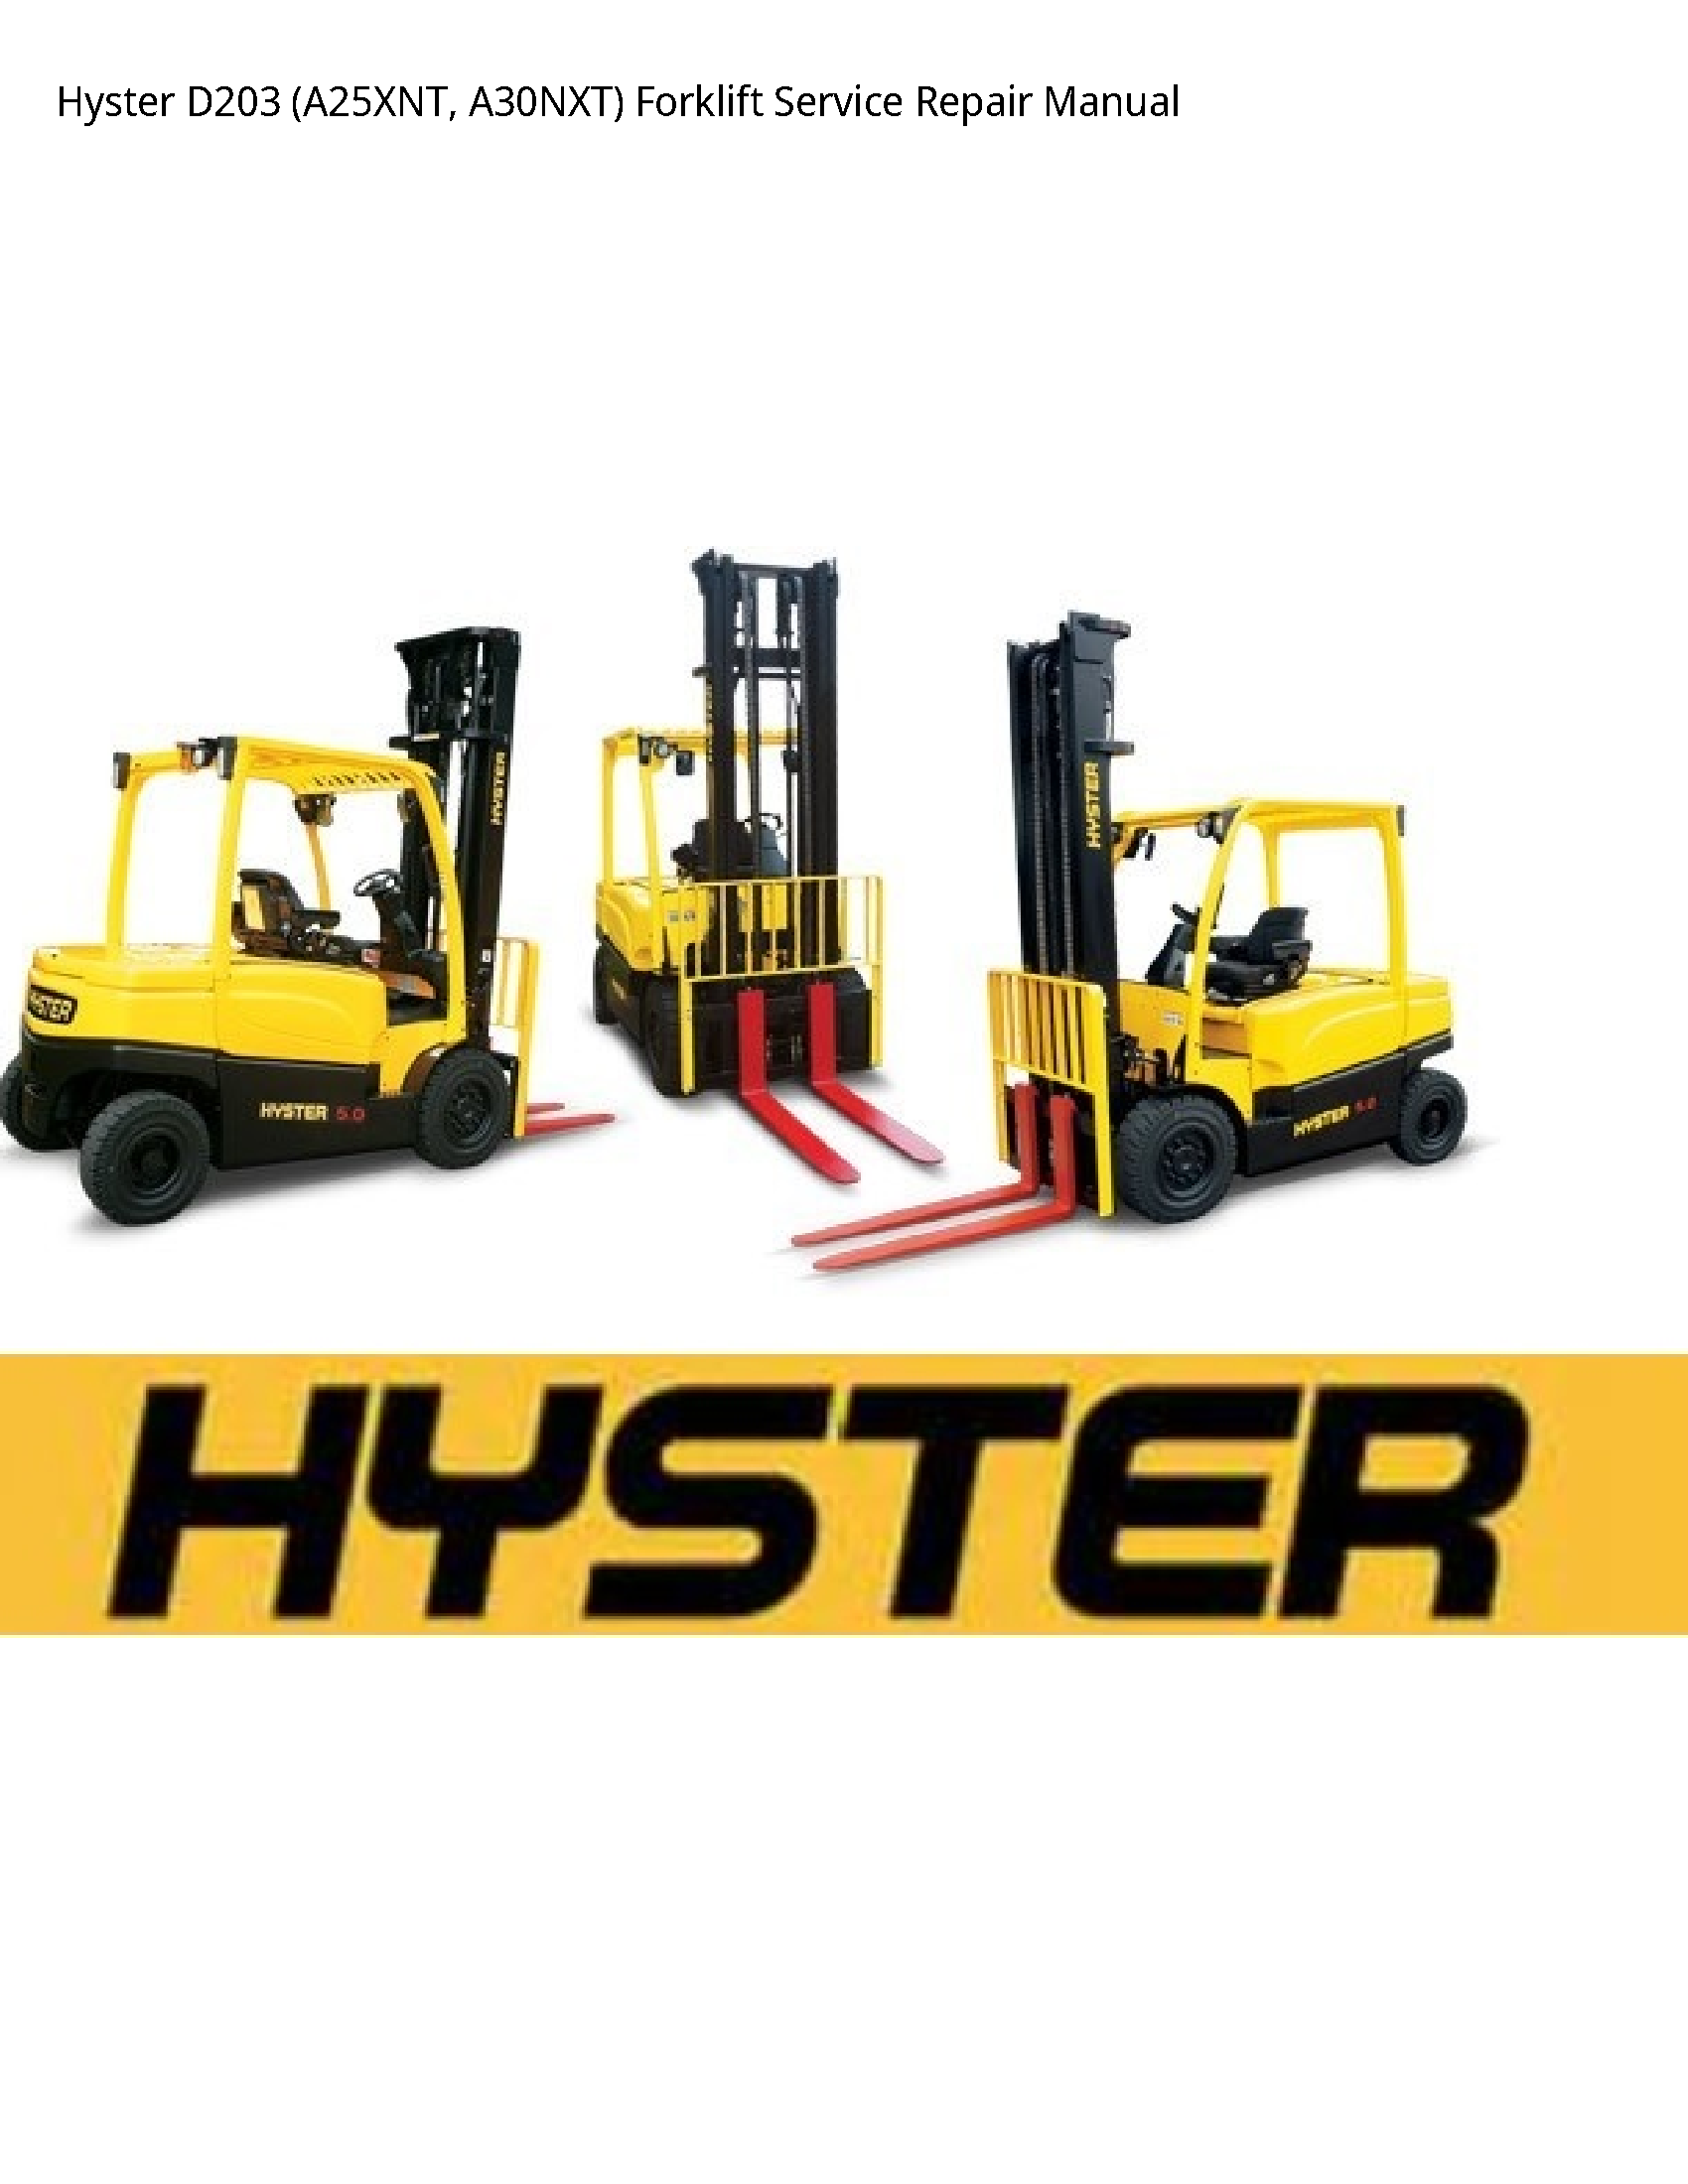 Hyster D203 Forklift manual